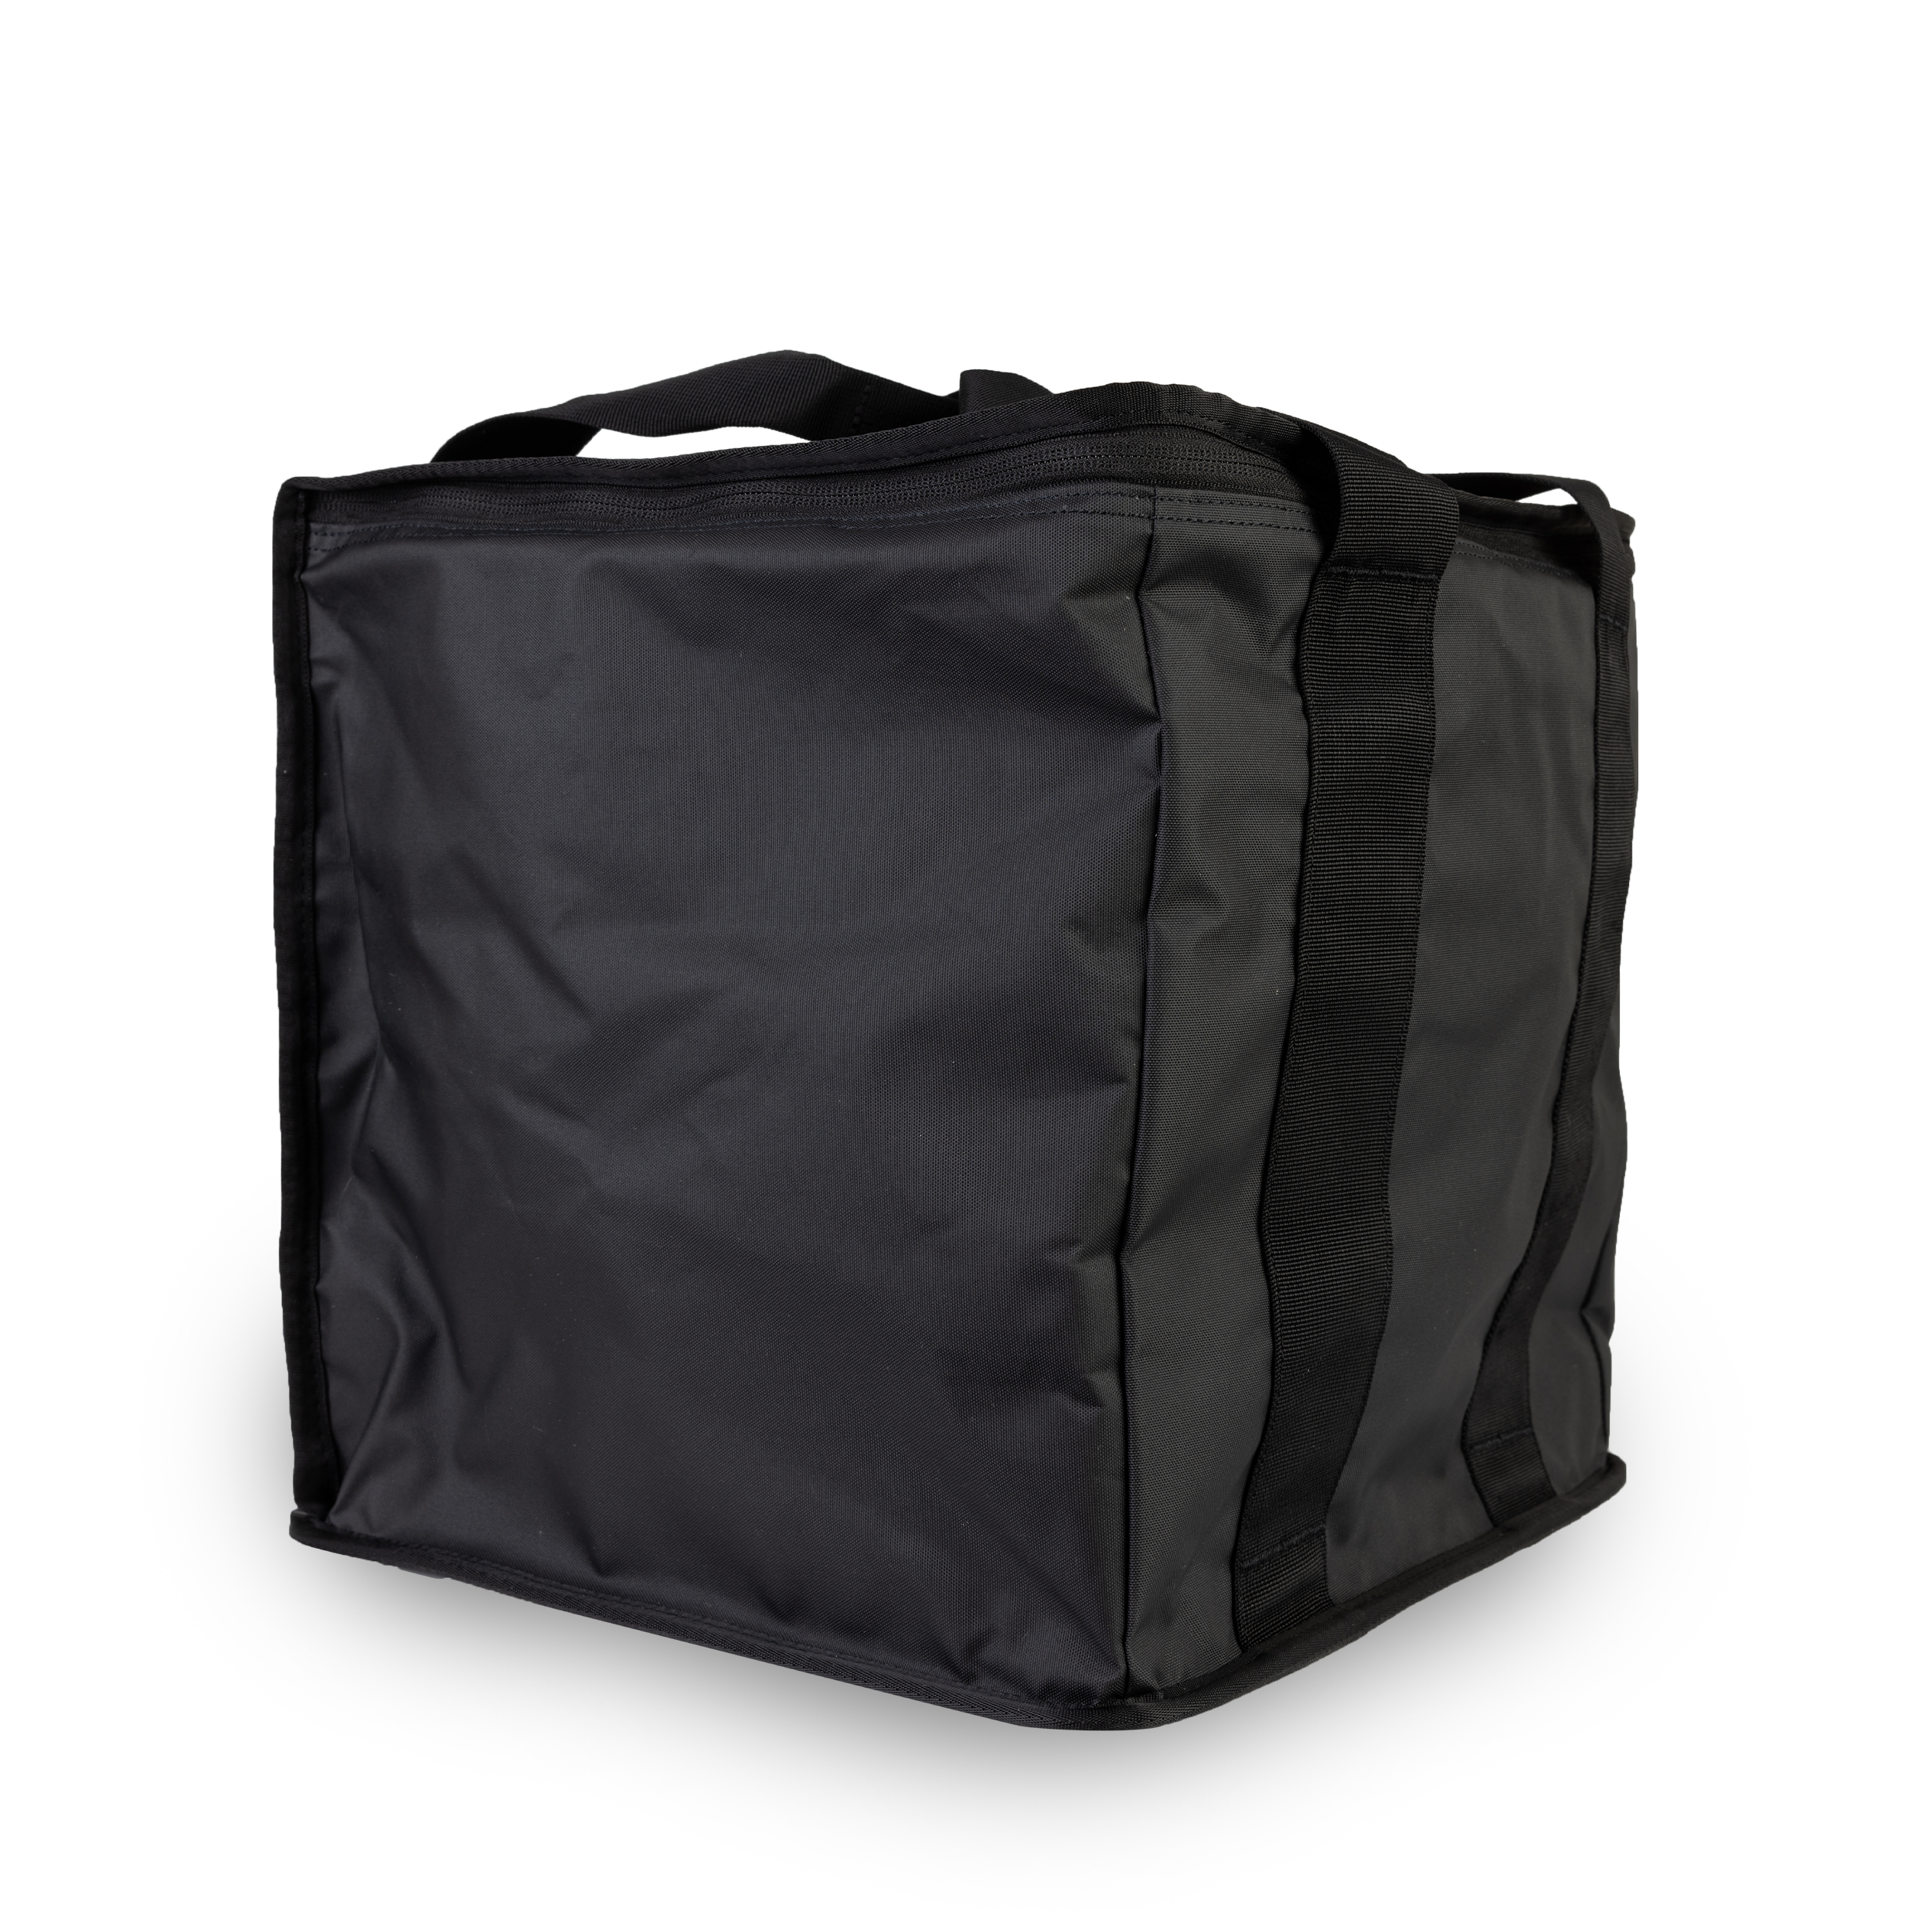 ROAM Rugged Bag 1.3